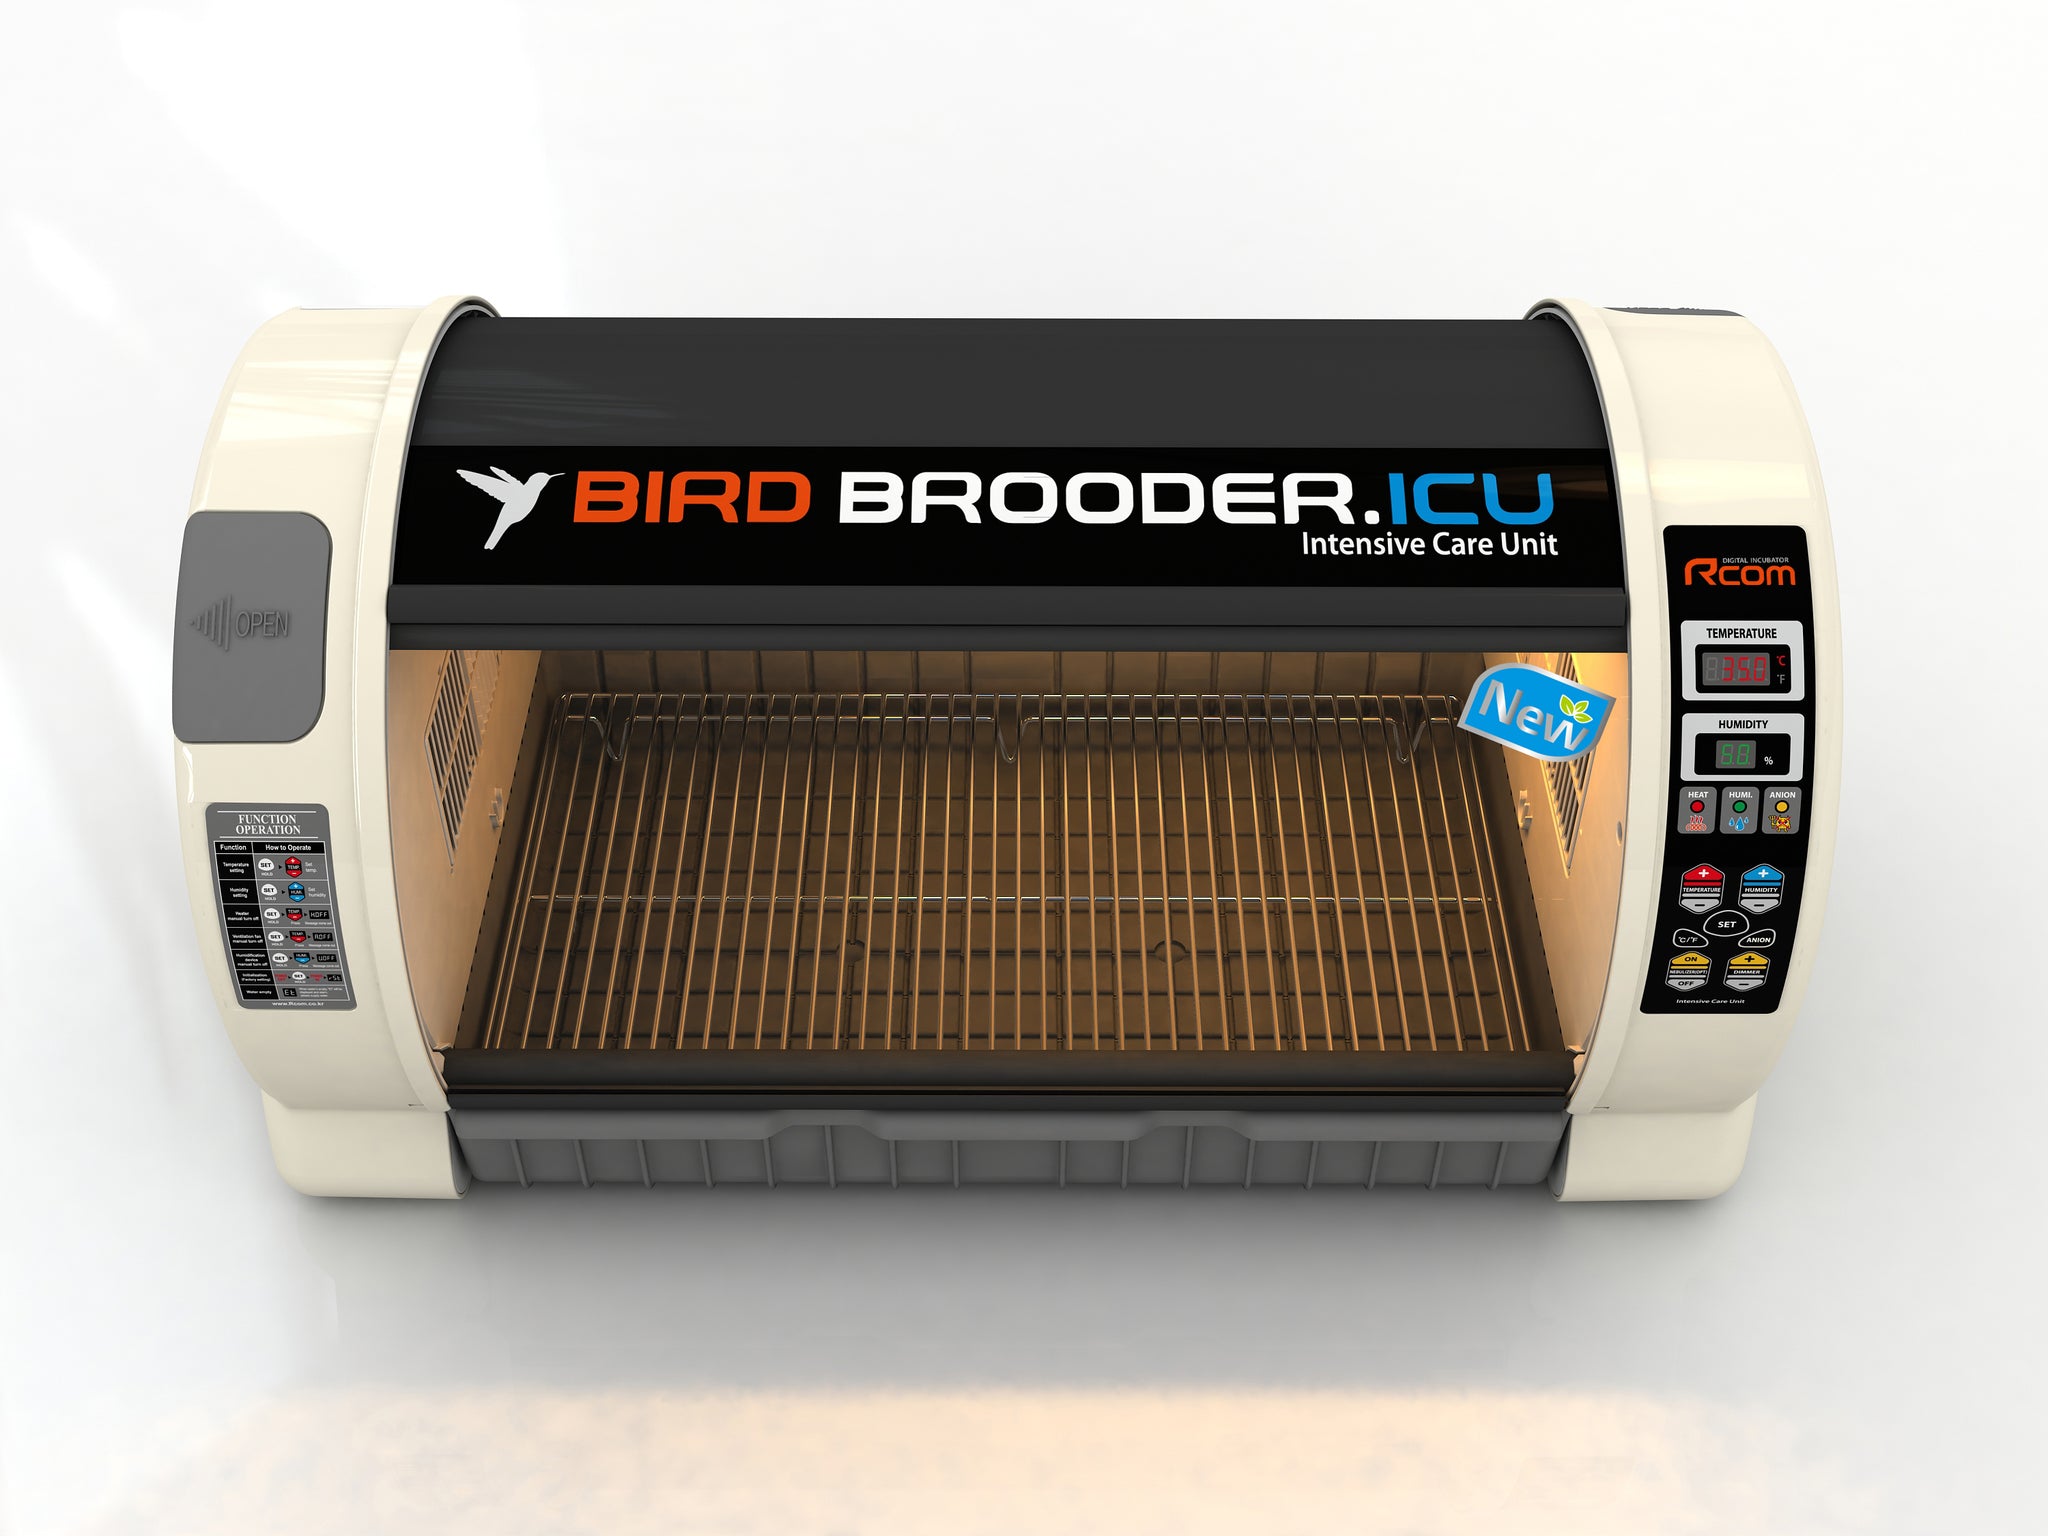 Rcom Large Bird Brooder ICU